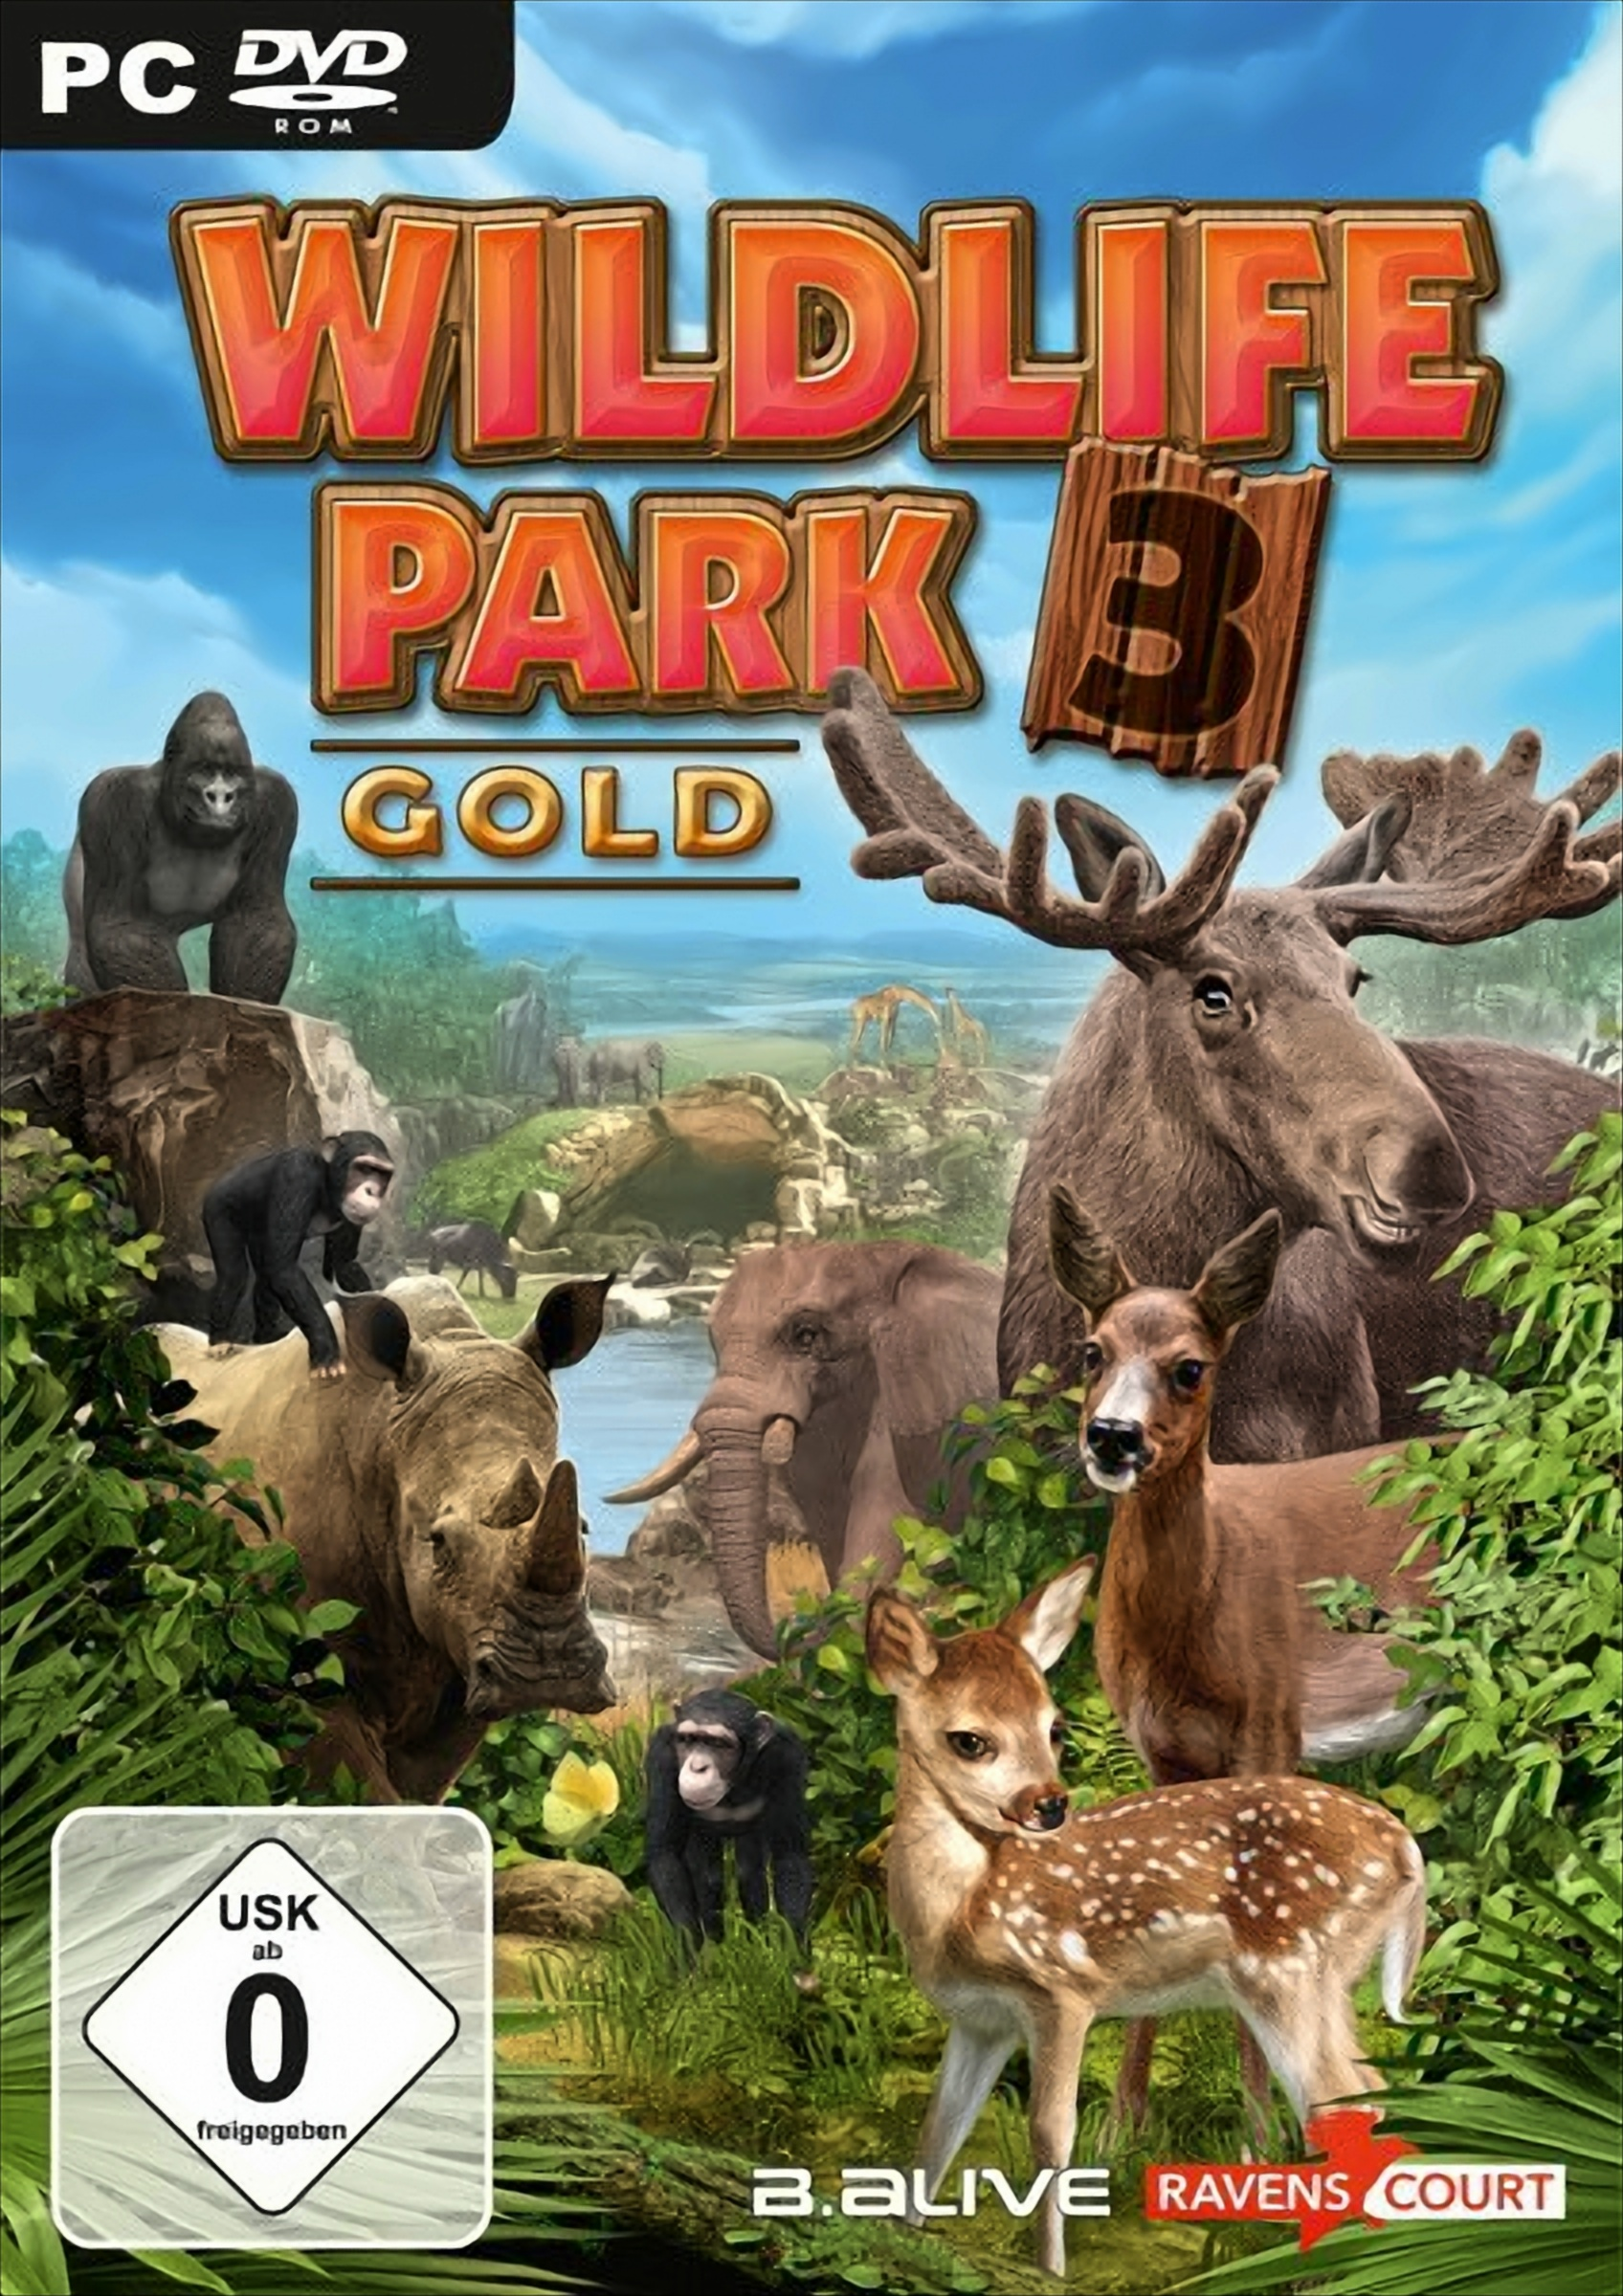 Park Gold 3 Wildlife [PC] -